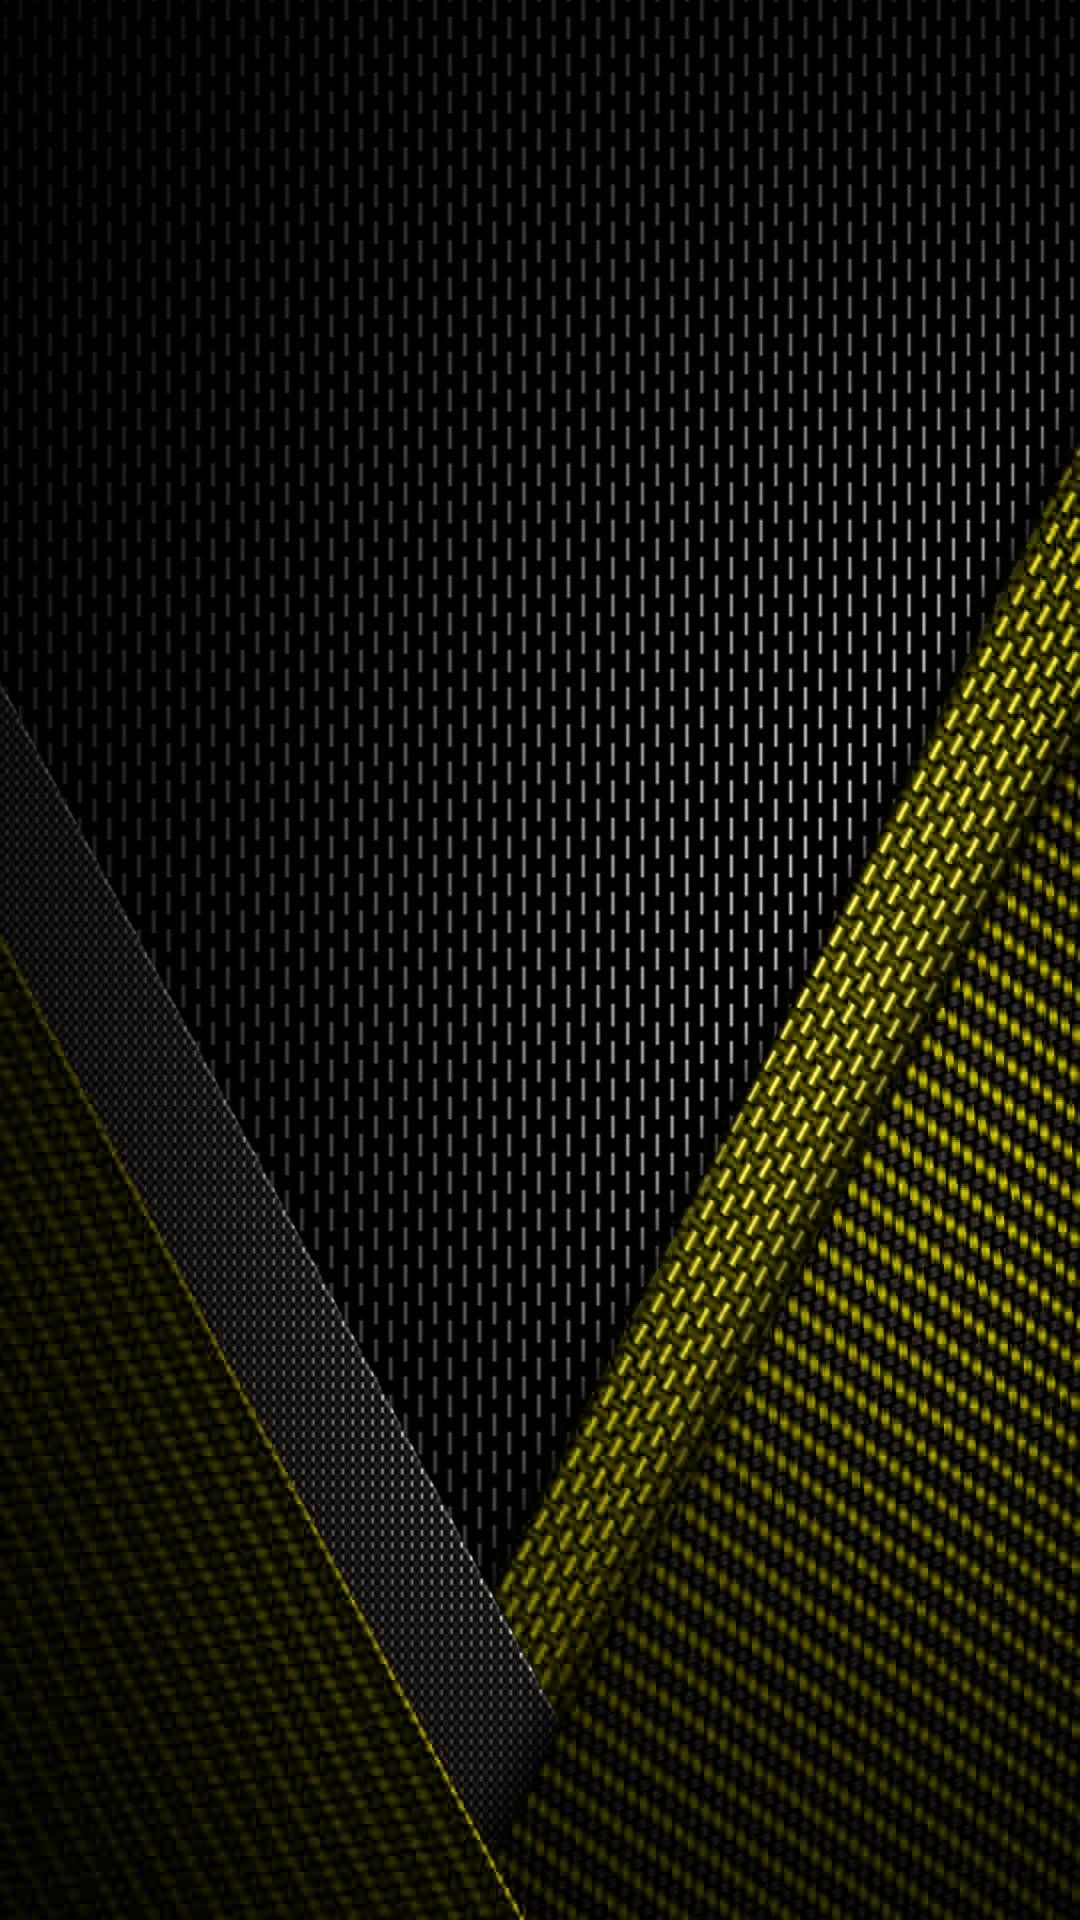 Black And Yellow Wallpaper Design | Blangsak Wall